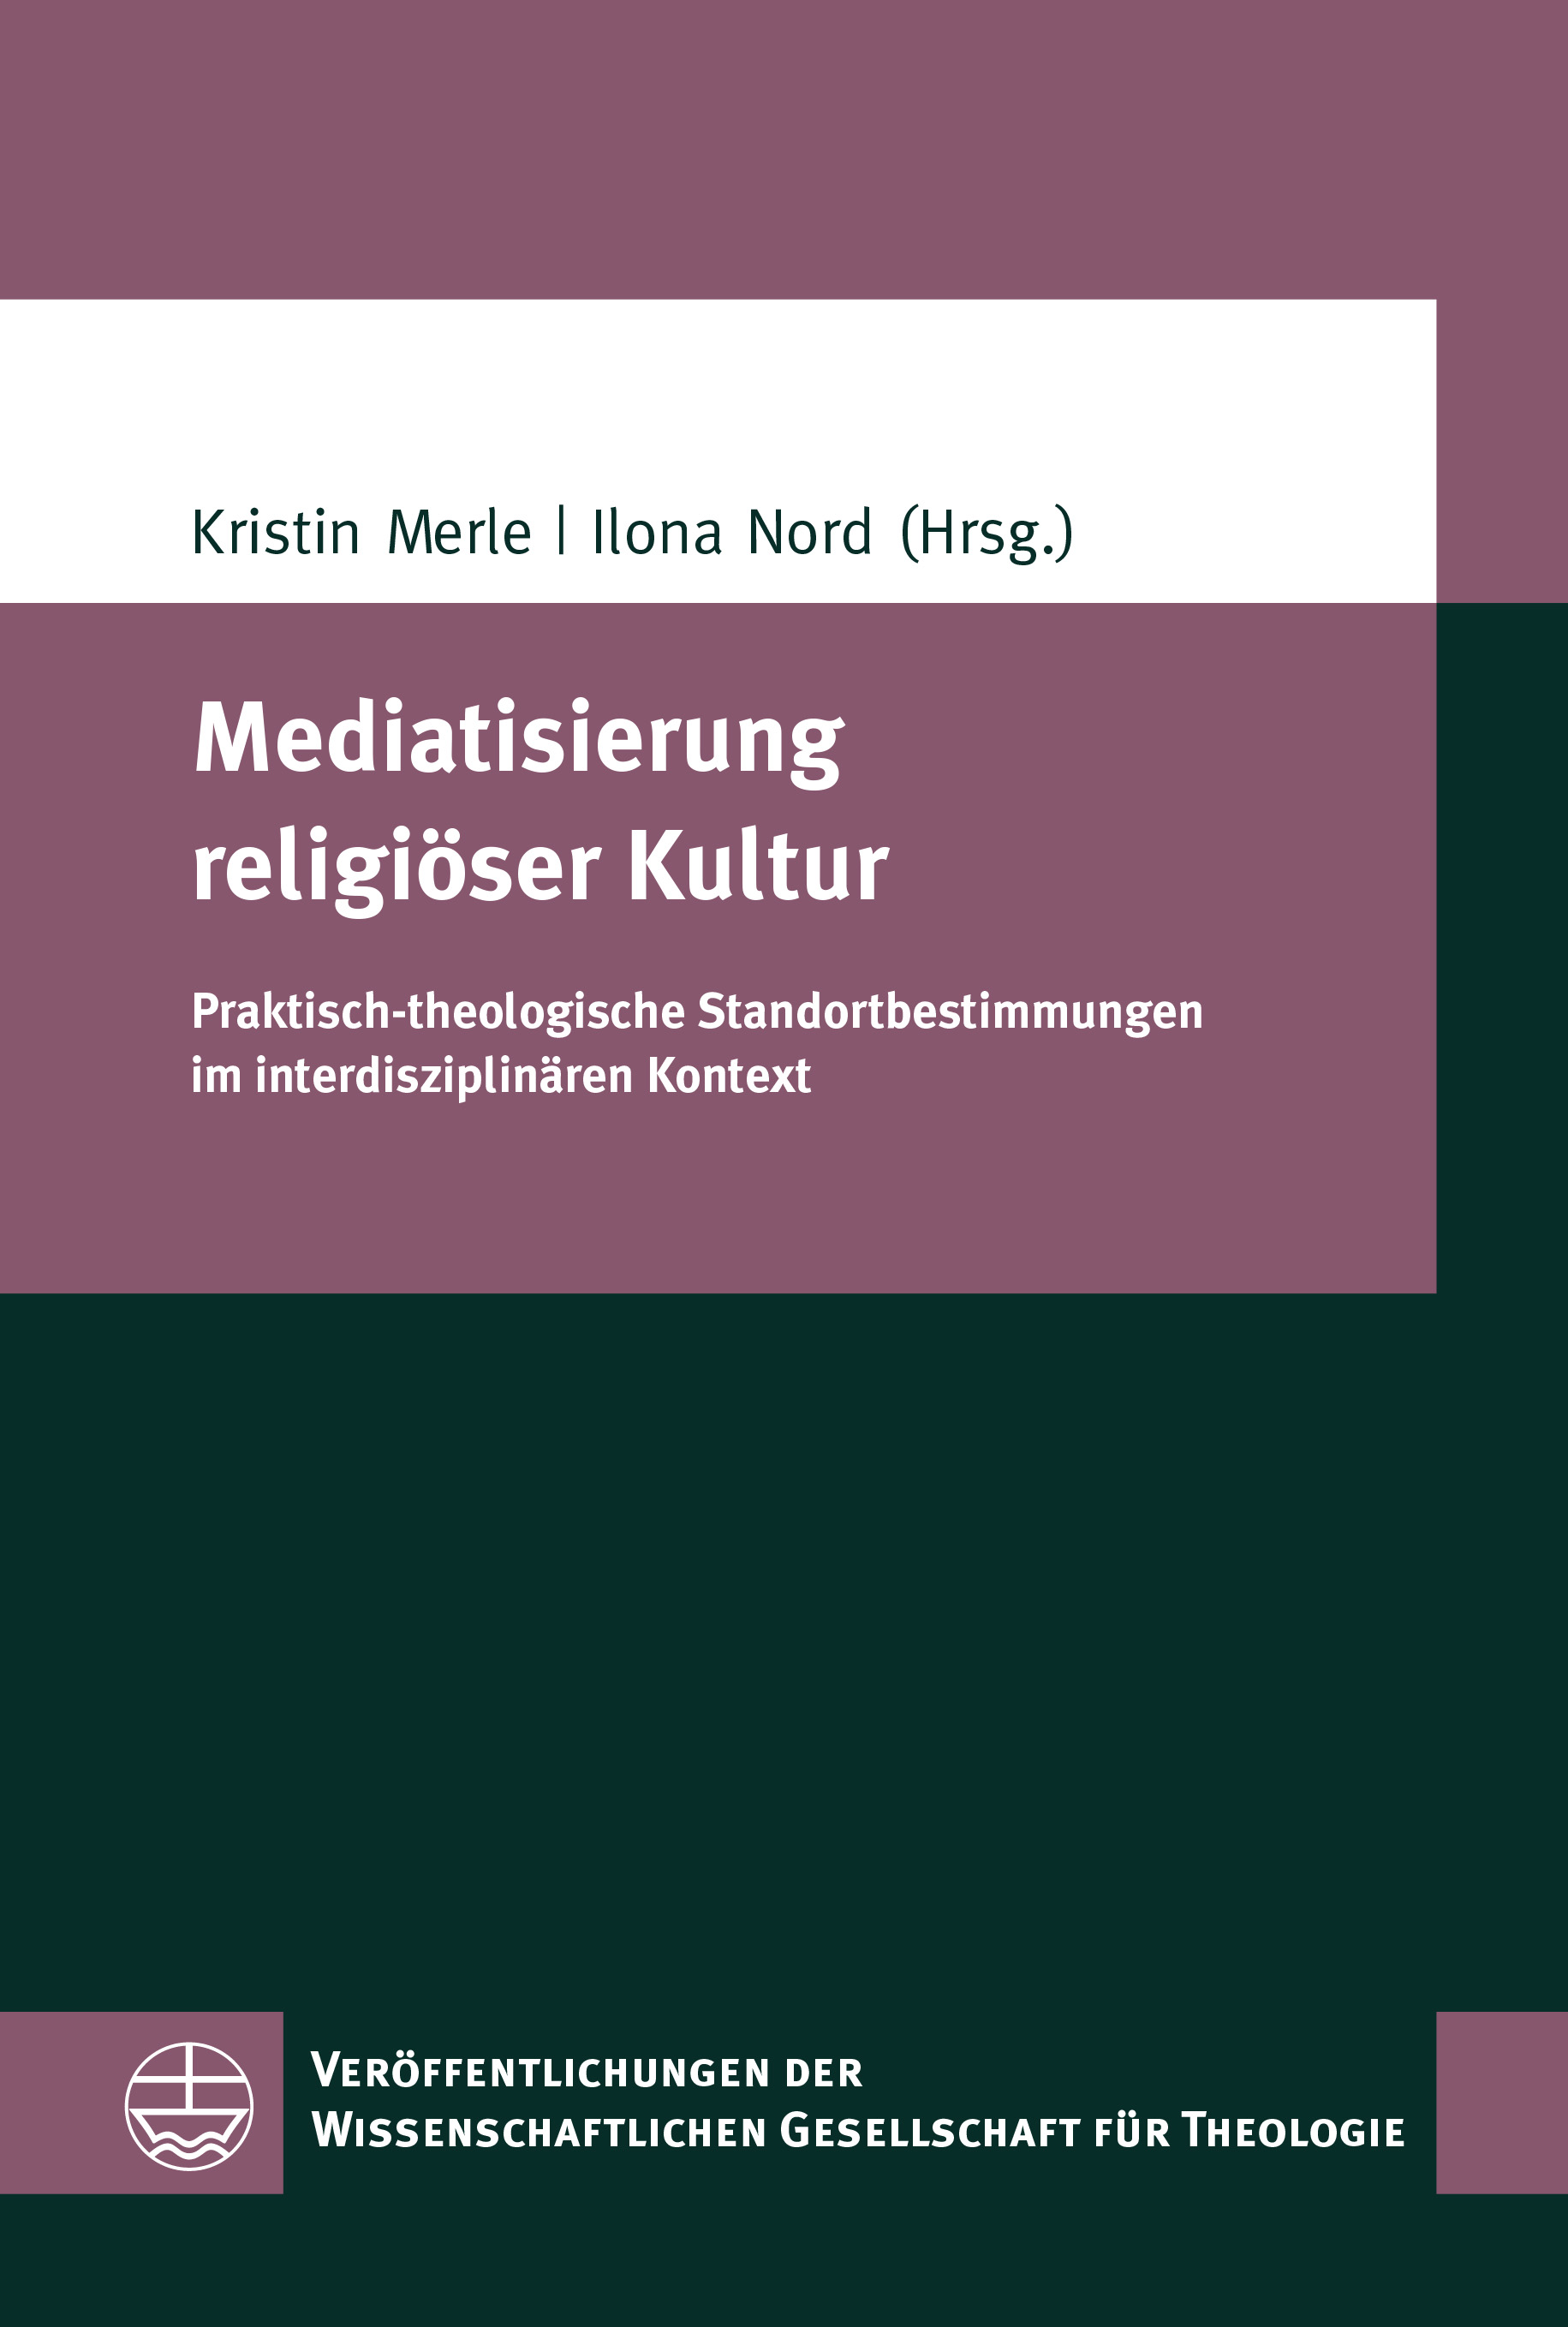 https://www.eva-leipzig.de/bilddownload/?image=05903_VWGTh_58_Merle_Nord_Mediatisierung_religioeser_Kultur.jpg